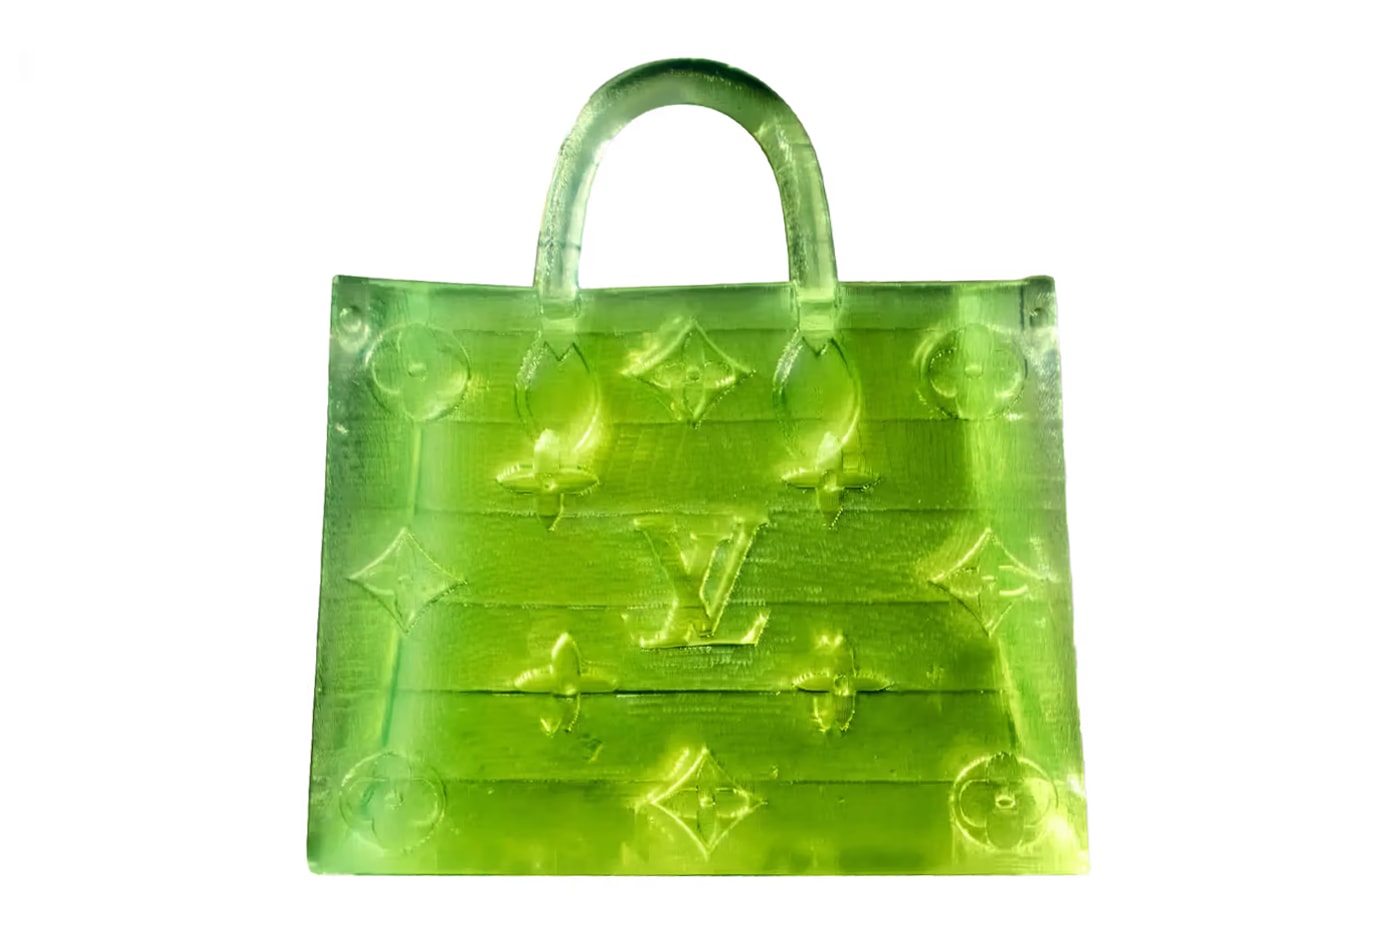 purse kit turn lv shopping bag cover